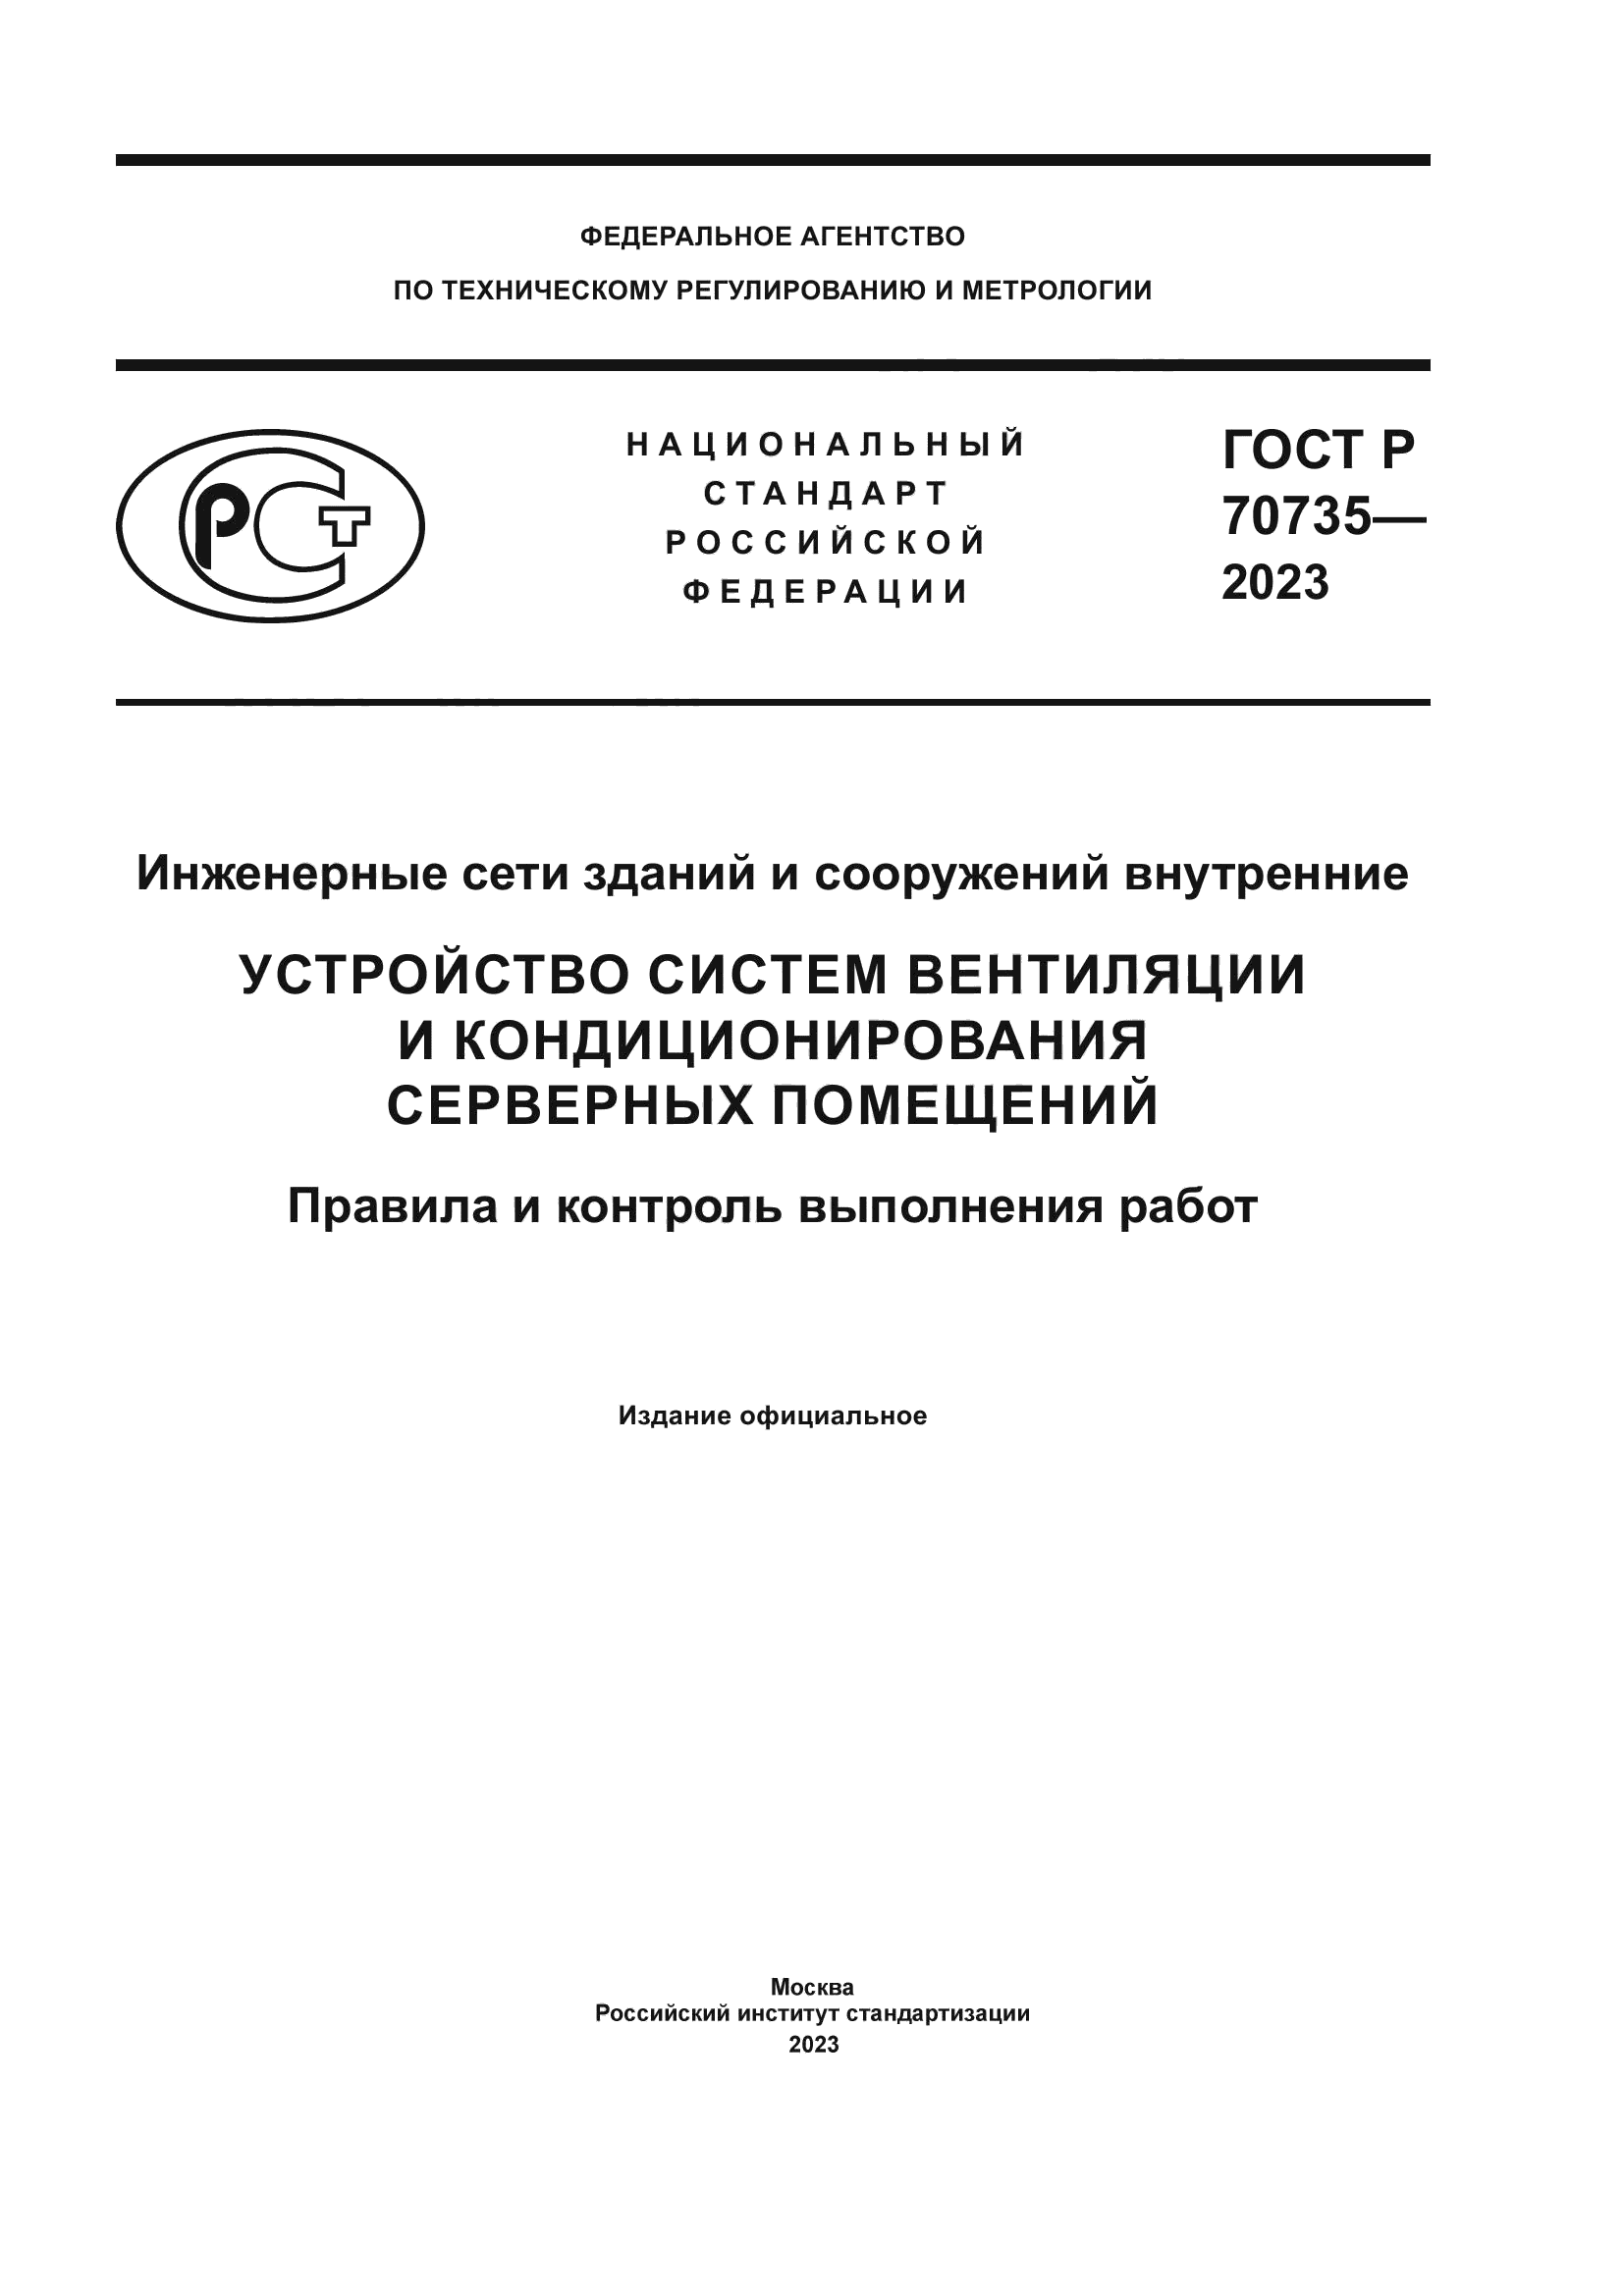 ГОСТ Р 70735-2023